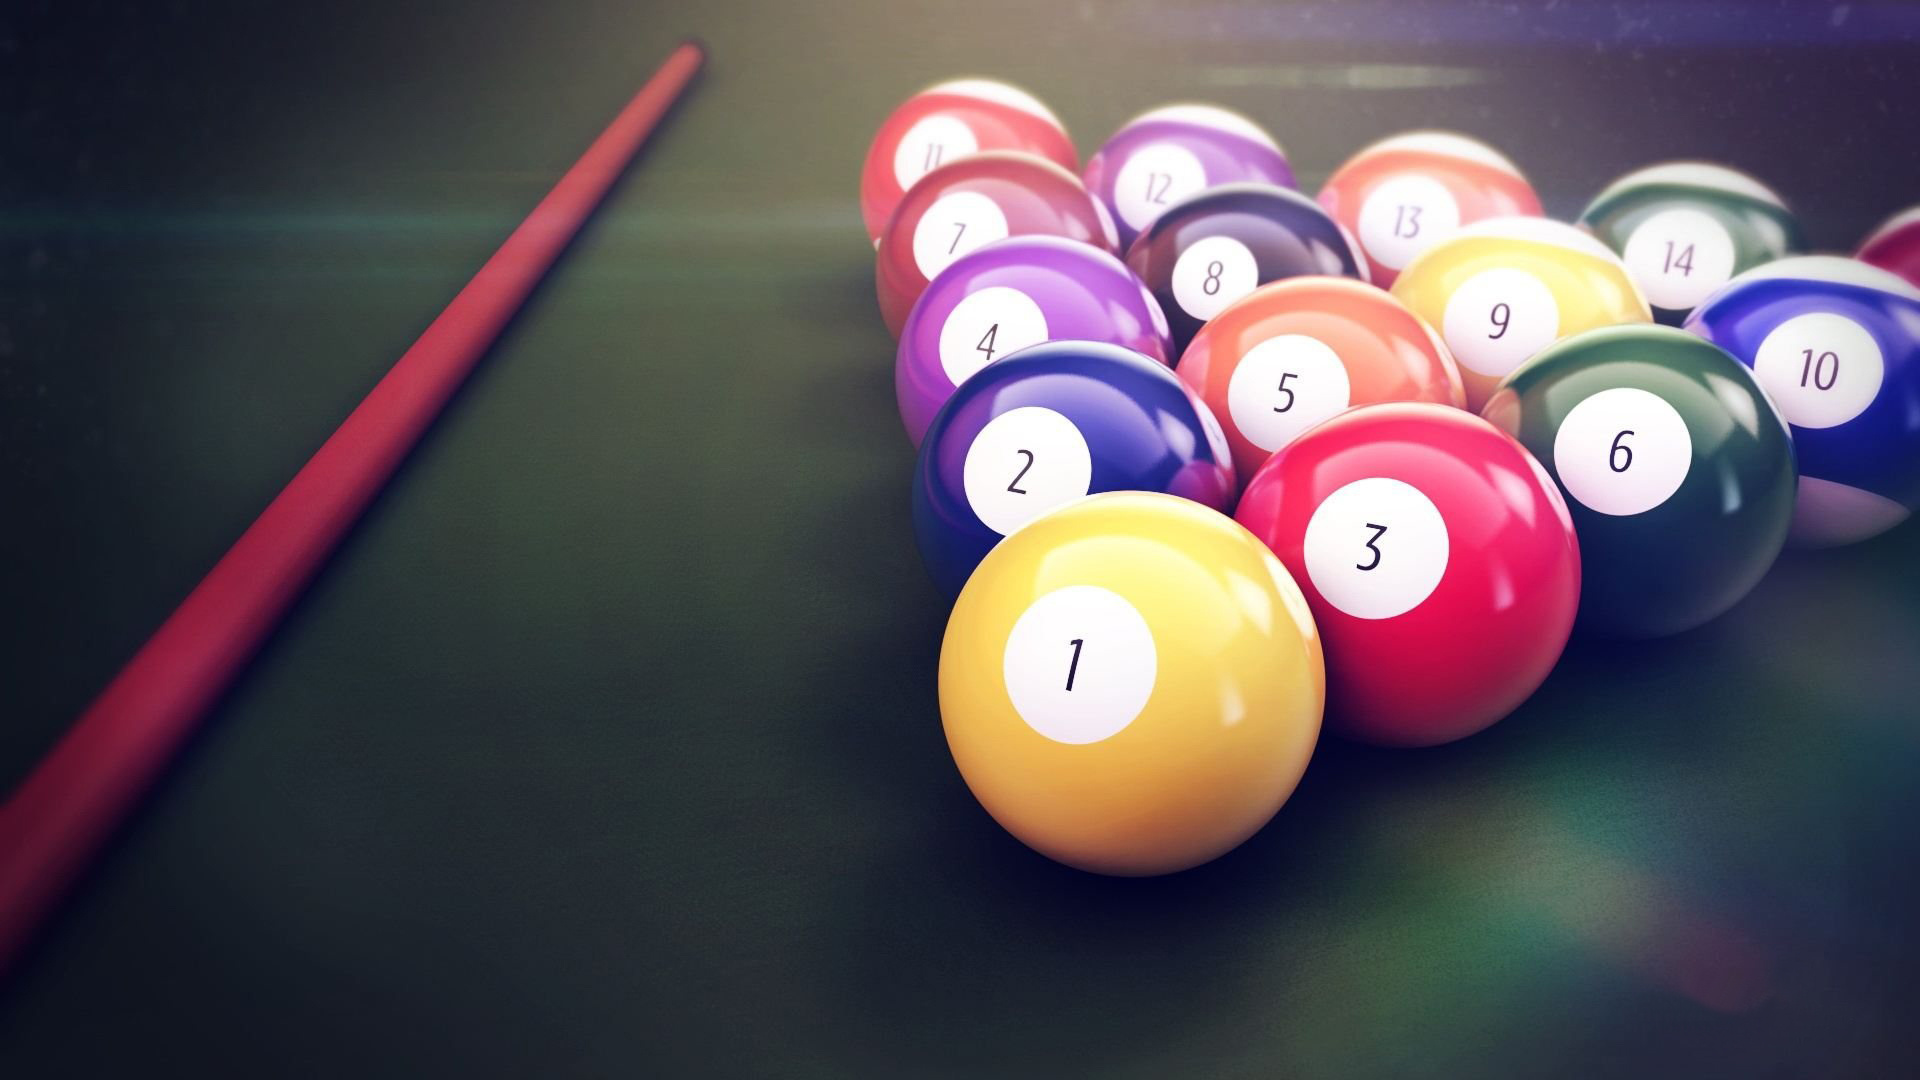 Cue Sports: Eight-ball, A pool billiards played on a billiard table with six pockets and sixteen billiard balls. 1920x1080 Full HD Wallpaper.